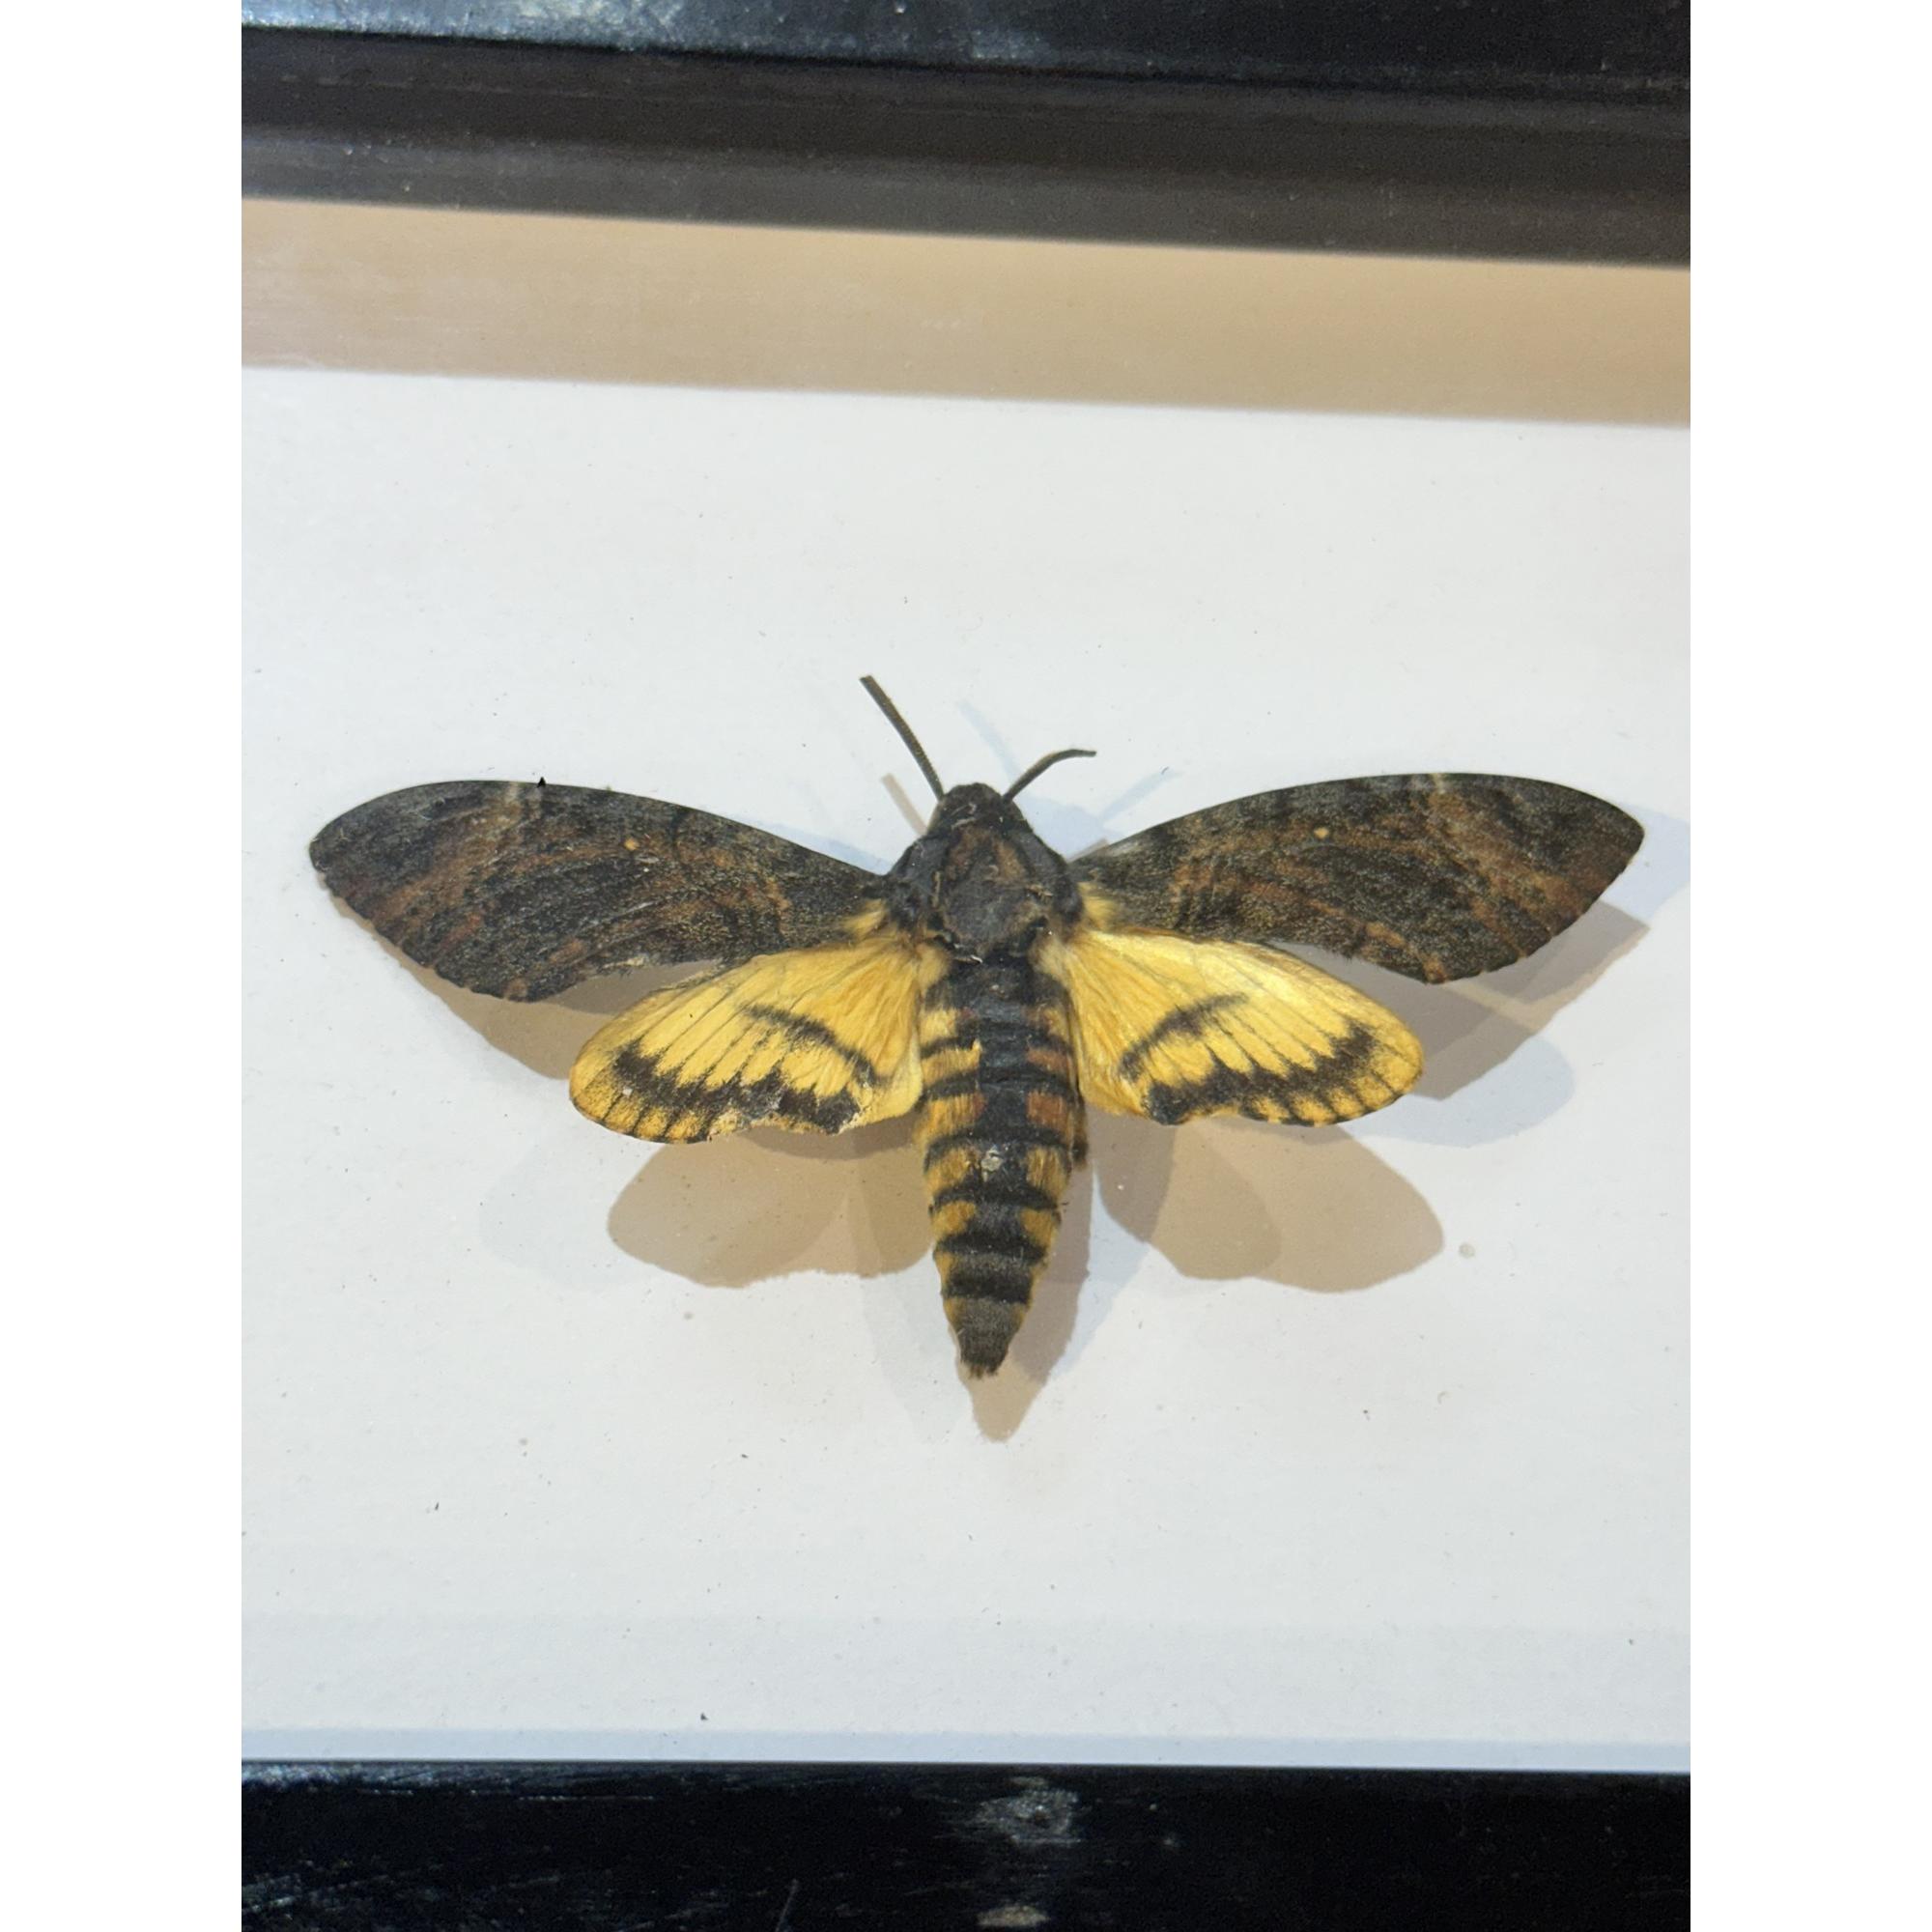 Death’s Head Moth in frame. Prehistoric Online